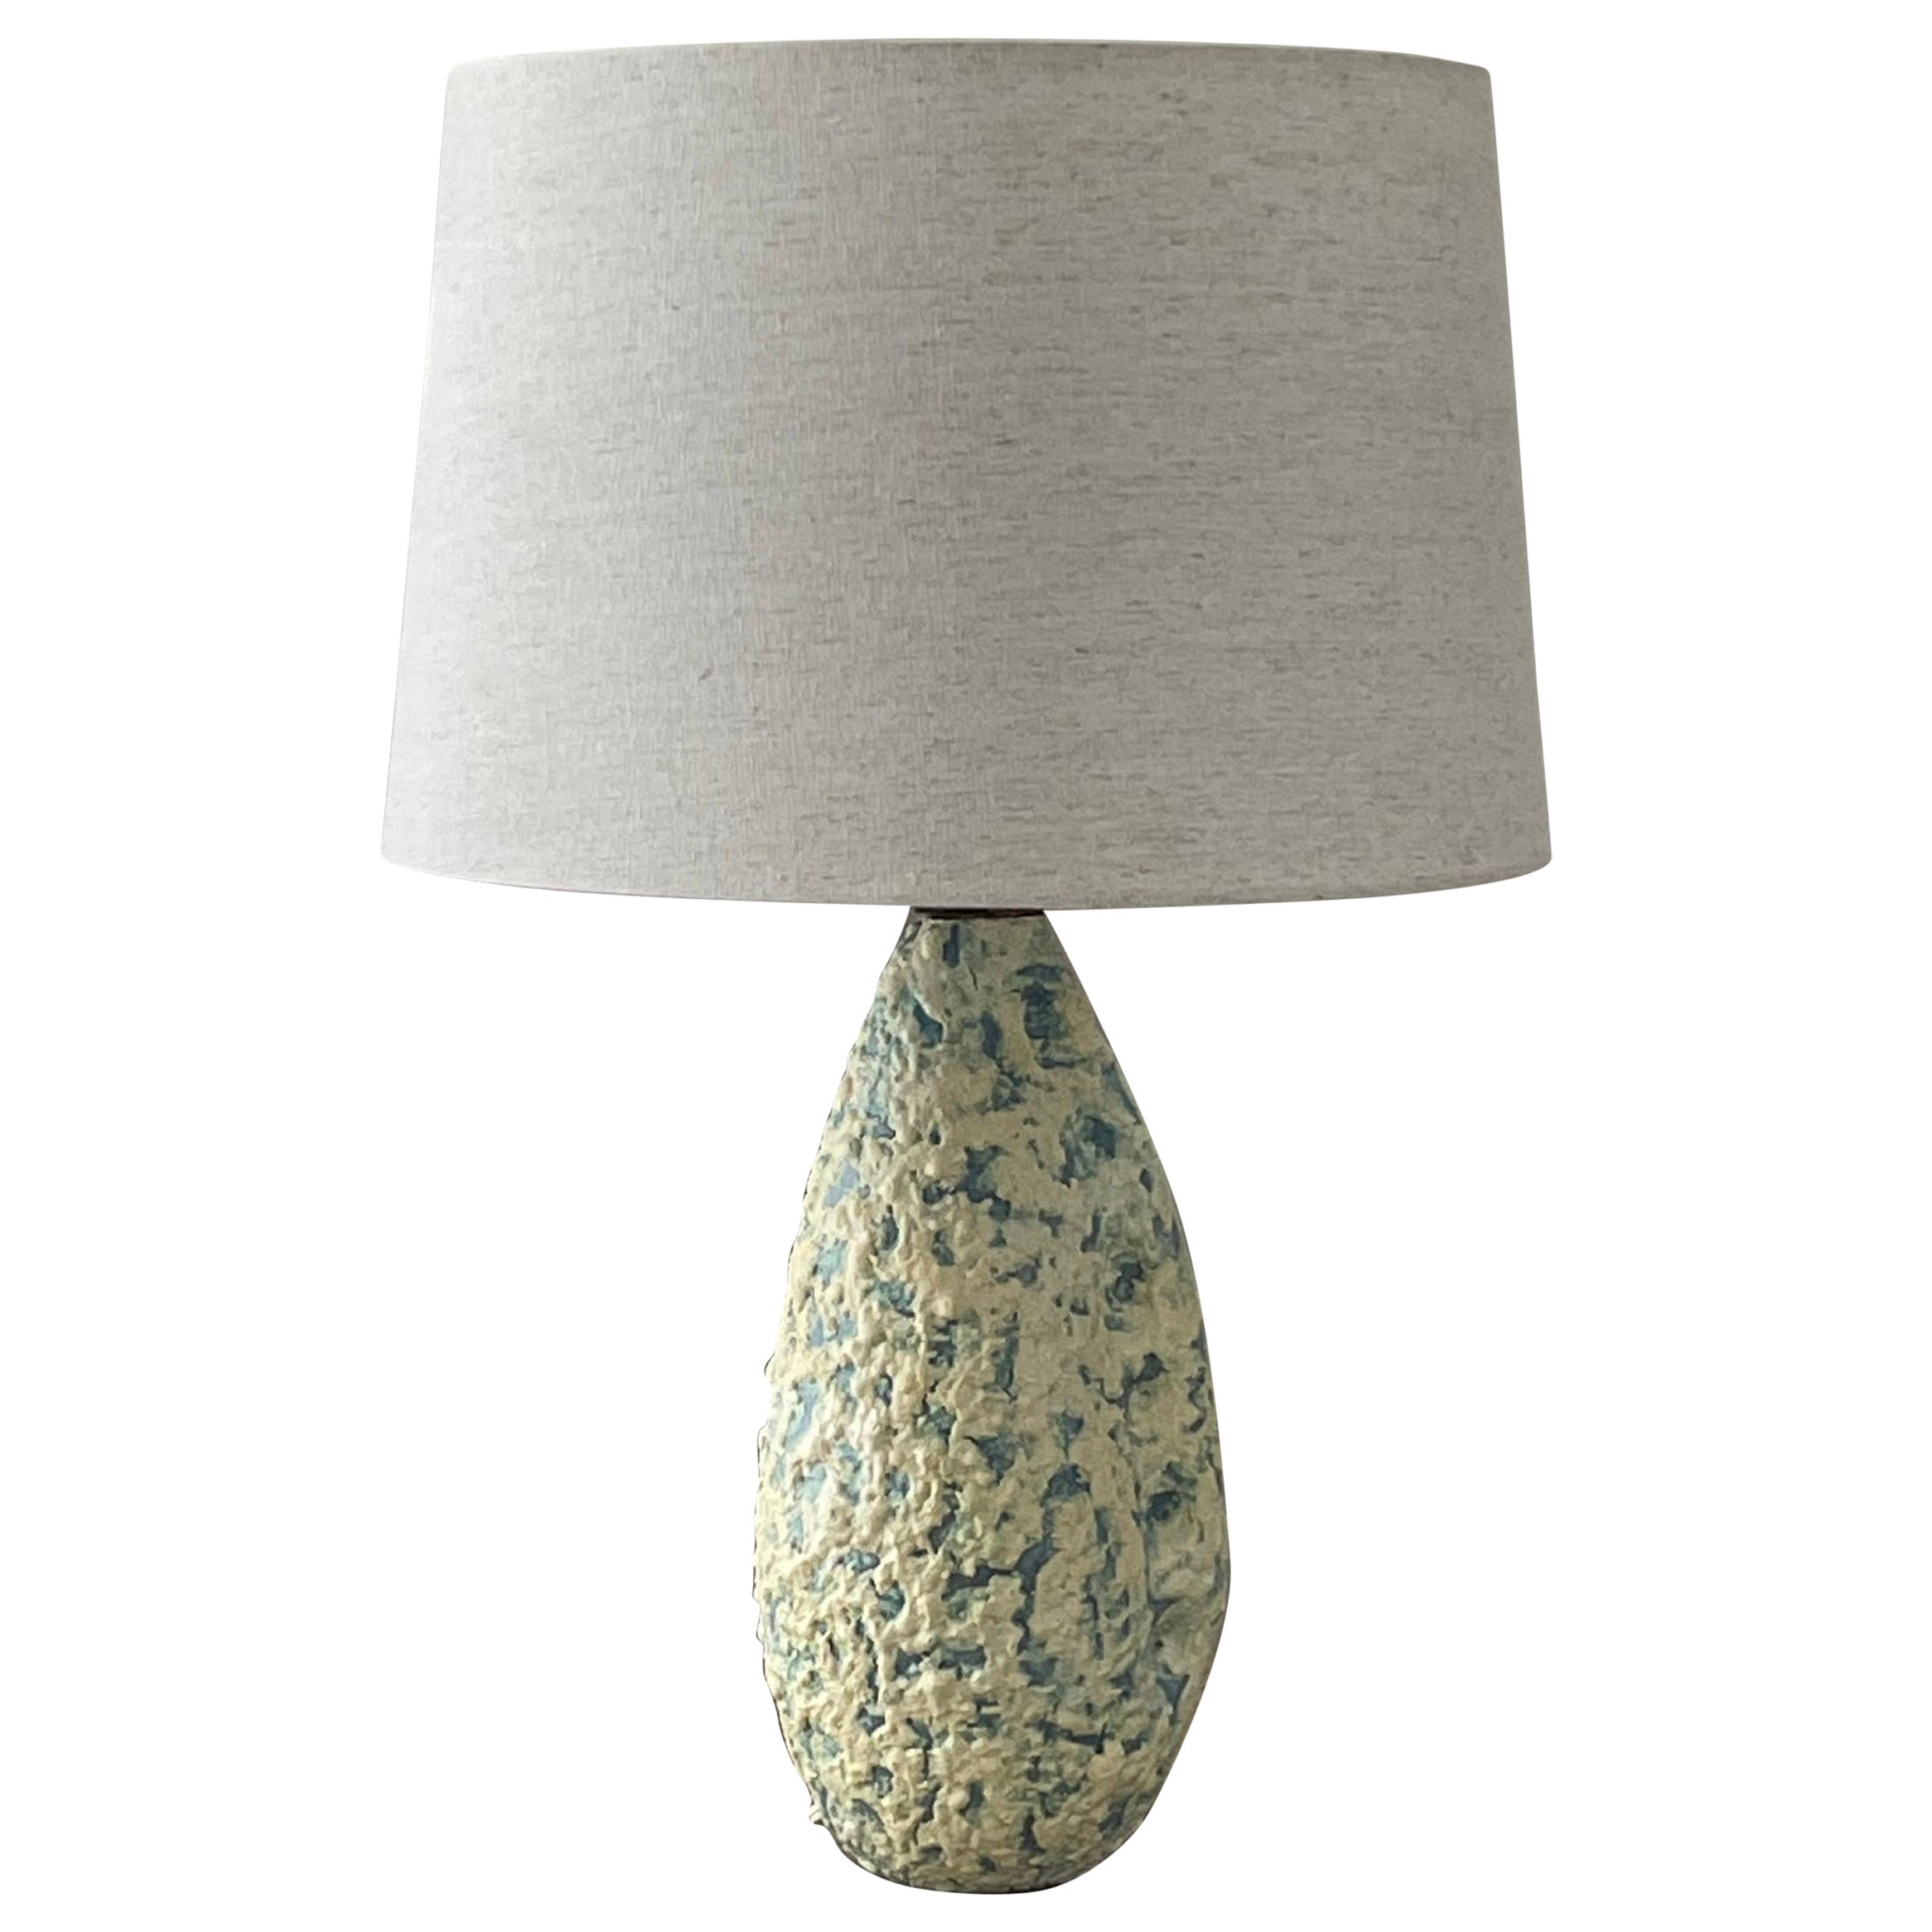 Marcello Fantoni Organic Shaped Ceramic Lamp with Heavy Texture Lava Glaze For Sale